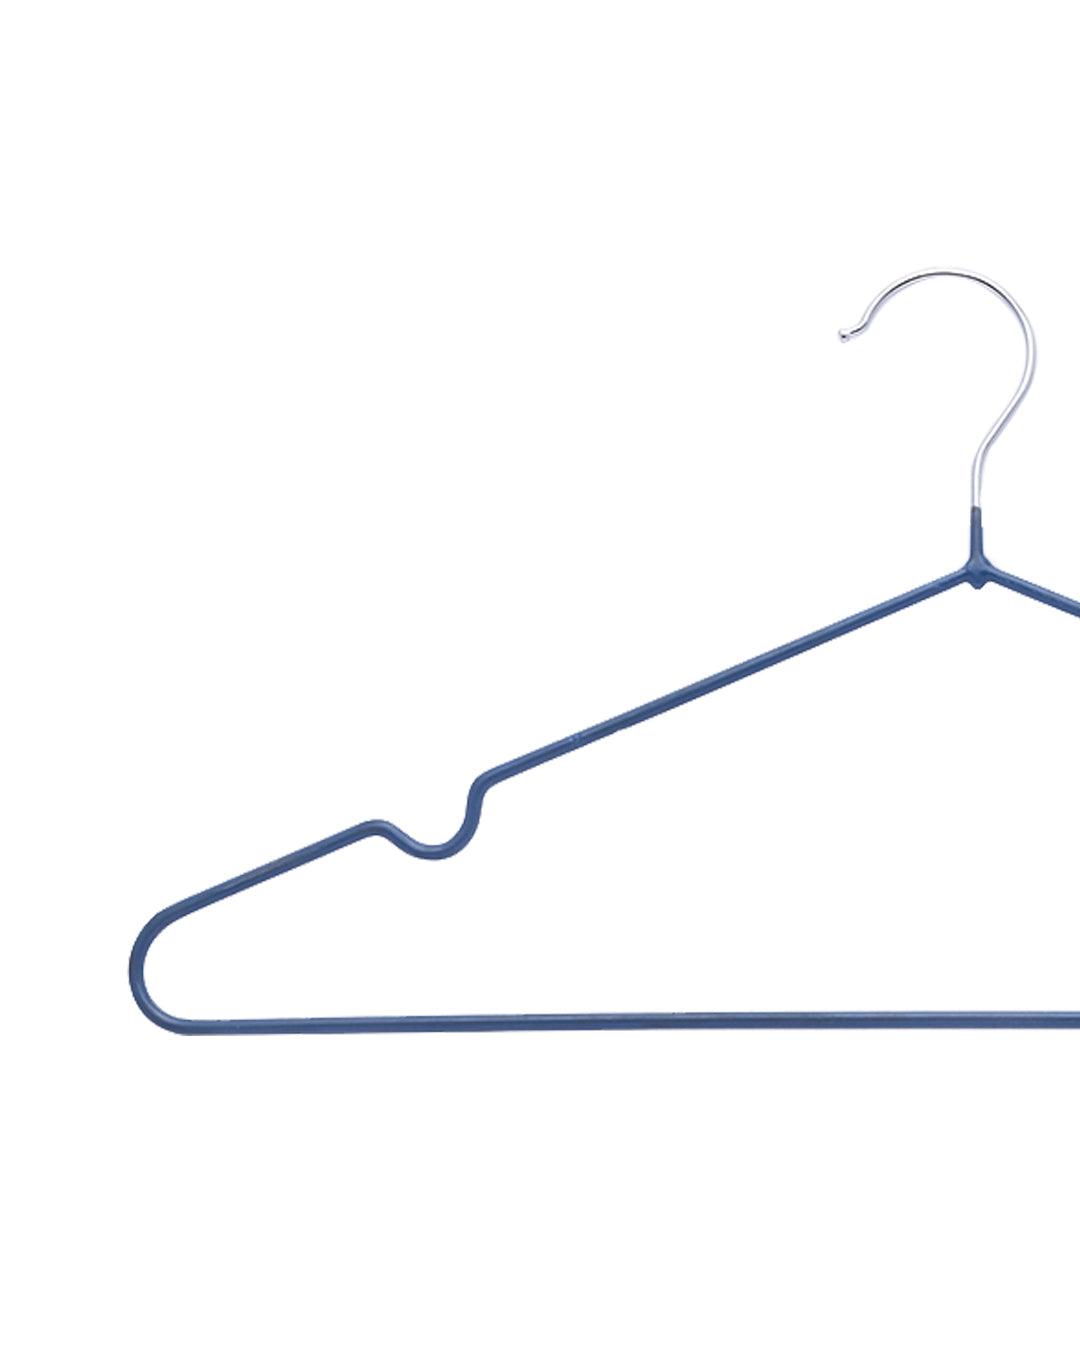 Clothes Hangers, Transparent, Heavy Duty, Clothing Standard Hangers, Plastic,  Set of 10 - MARKET99 – MARKET 99